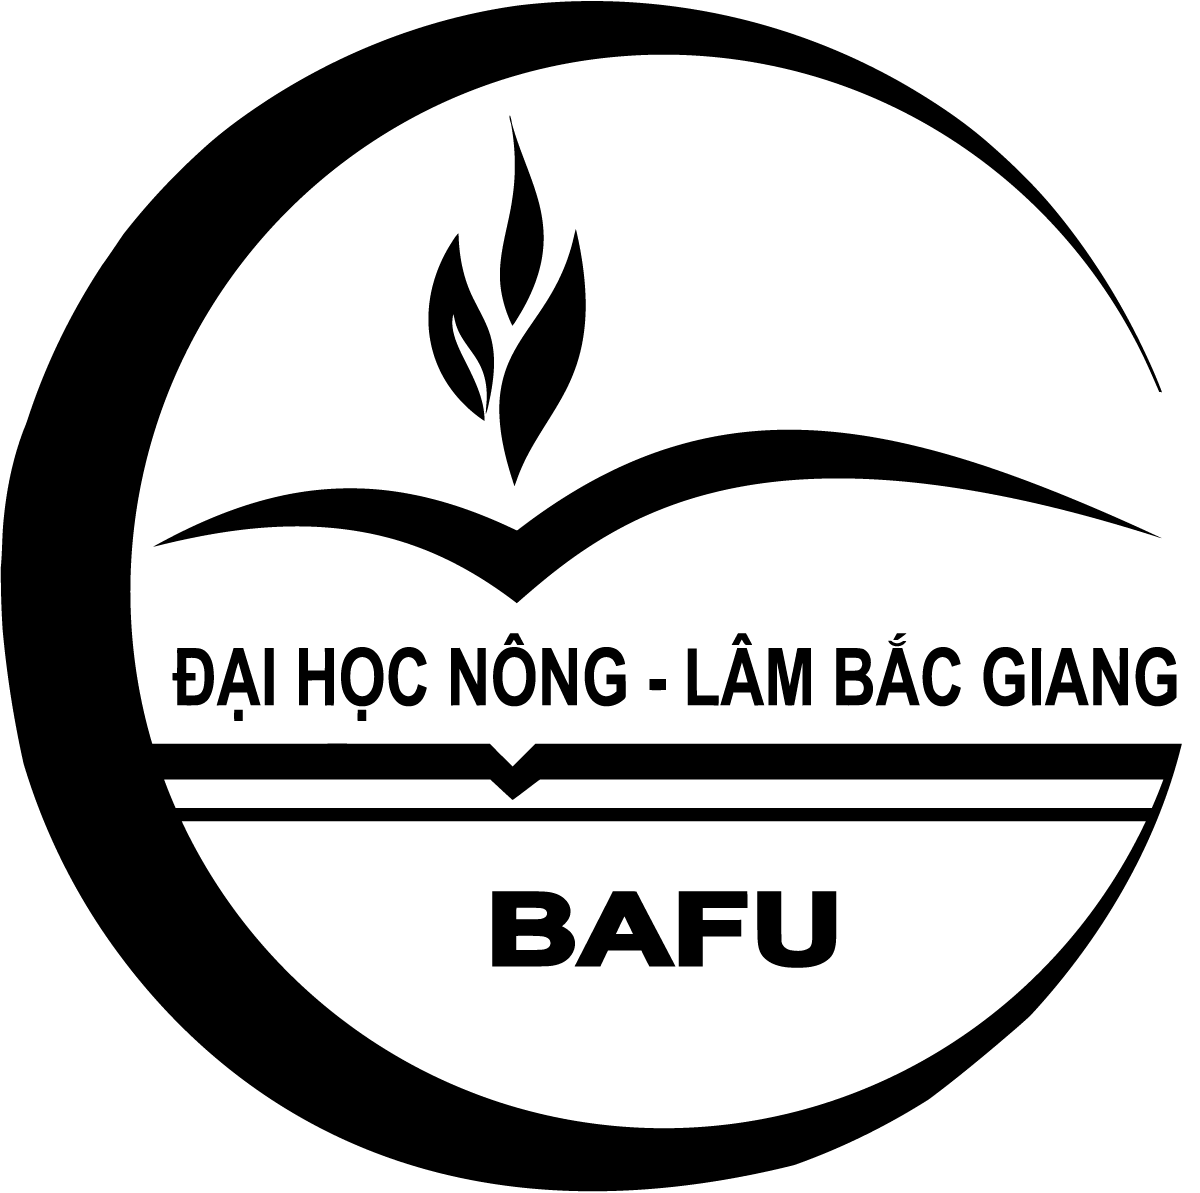 Truong Dai hoc Nong Lam Bac Giang am ban